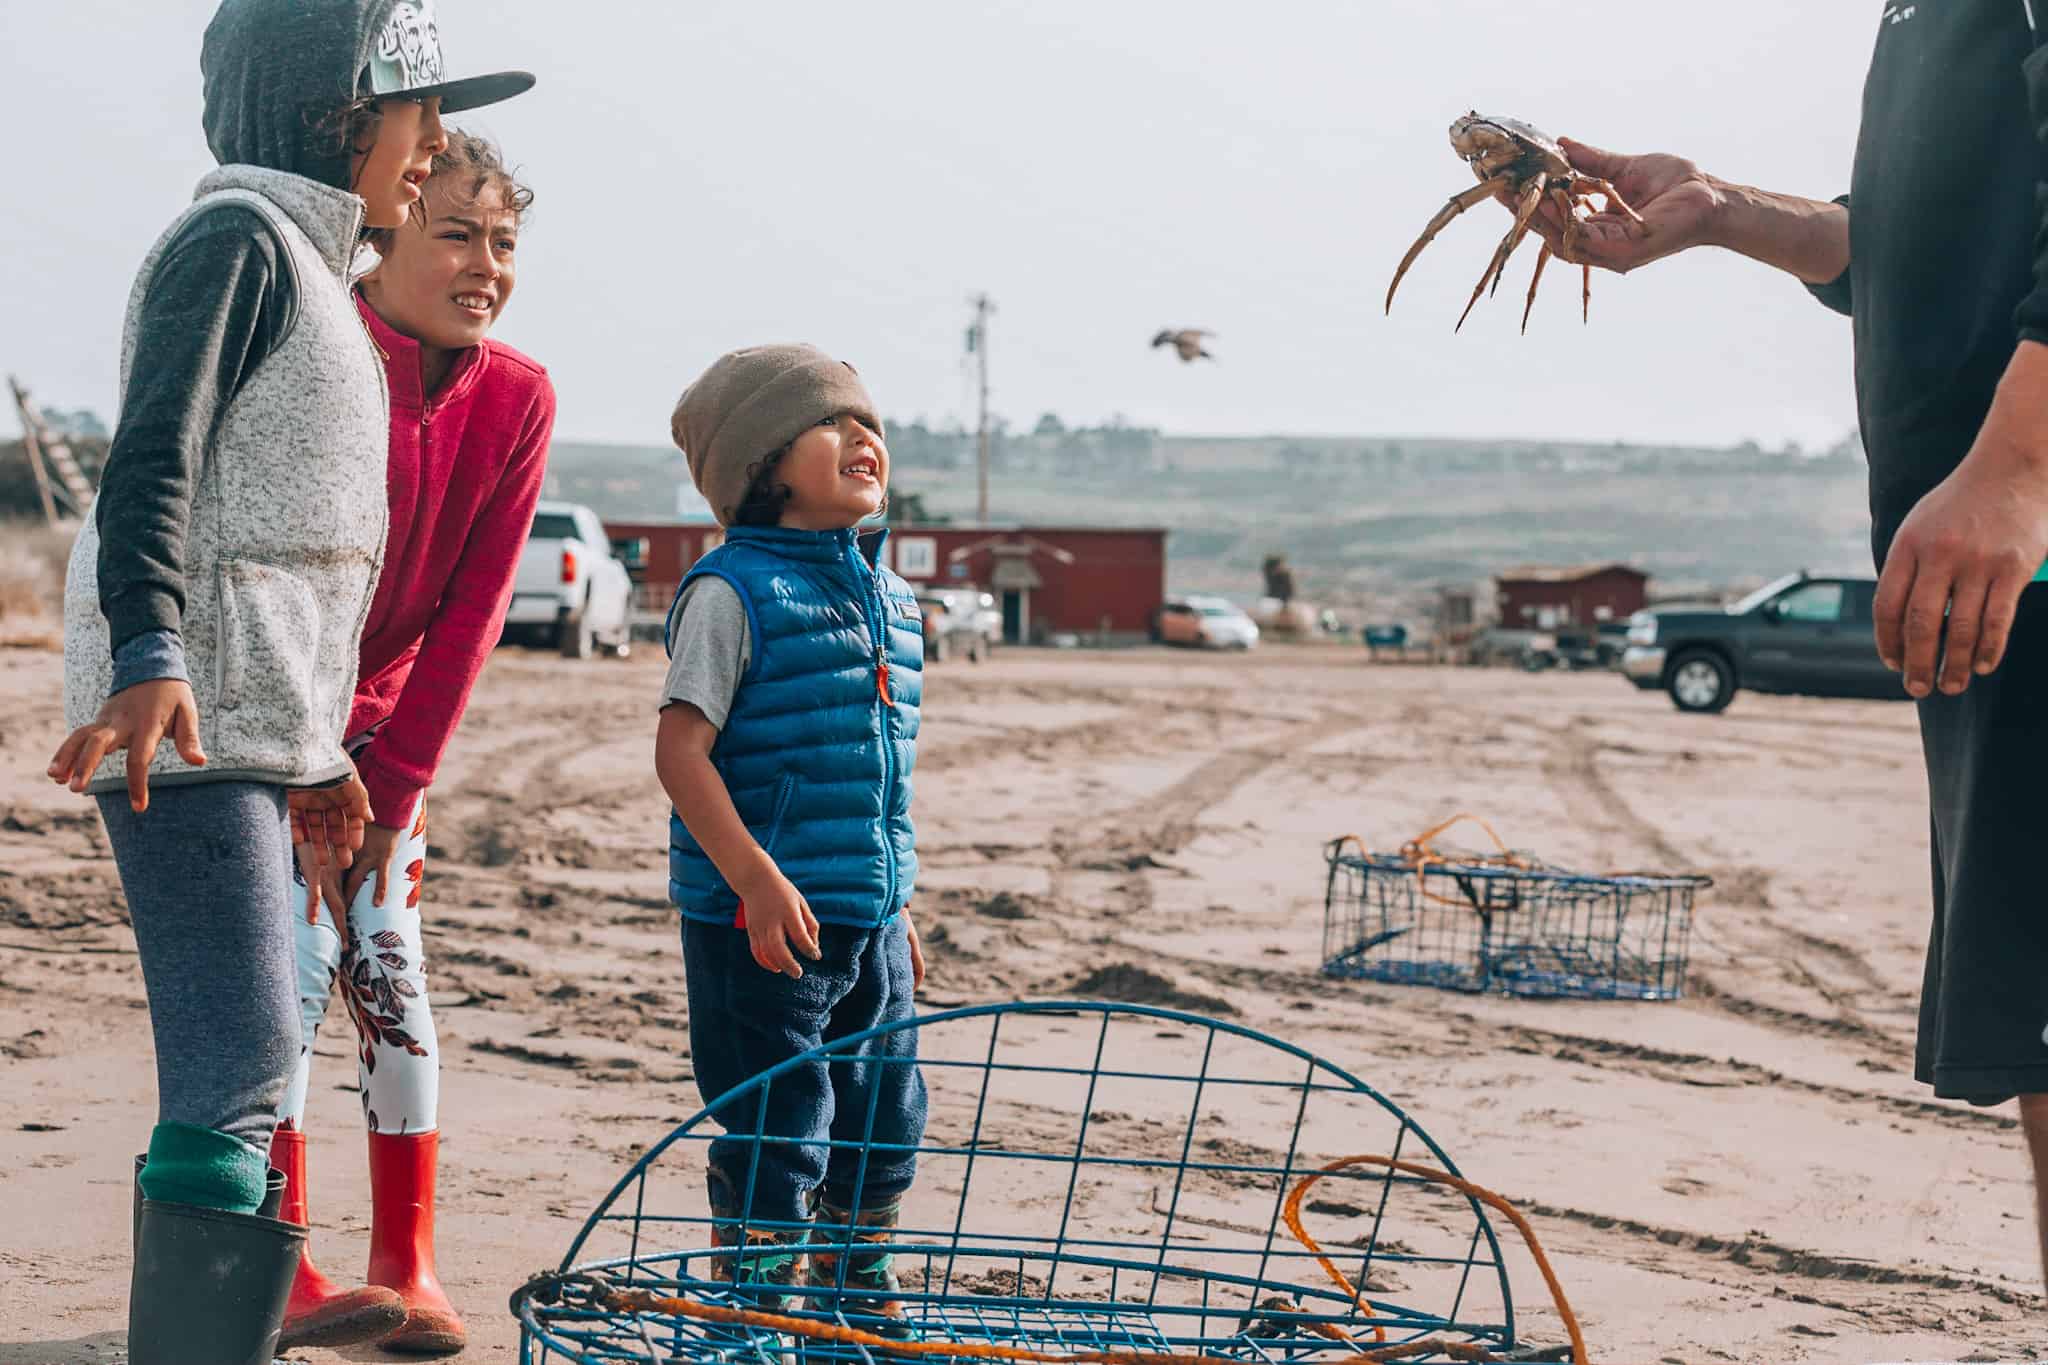 Crabbing with kids using crab pots